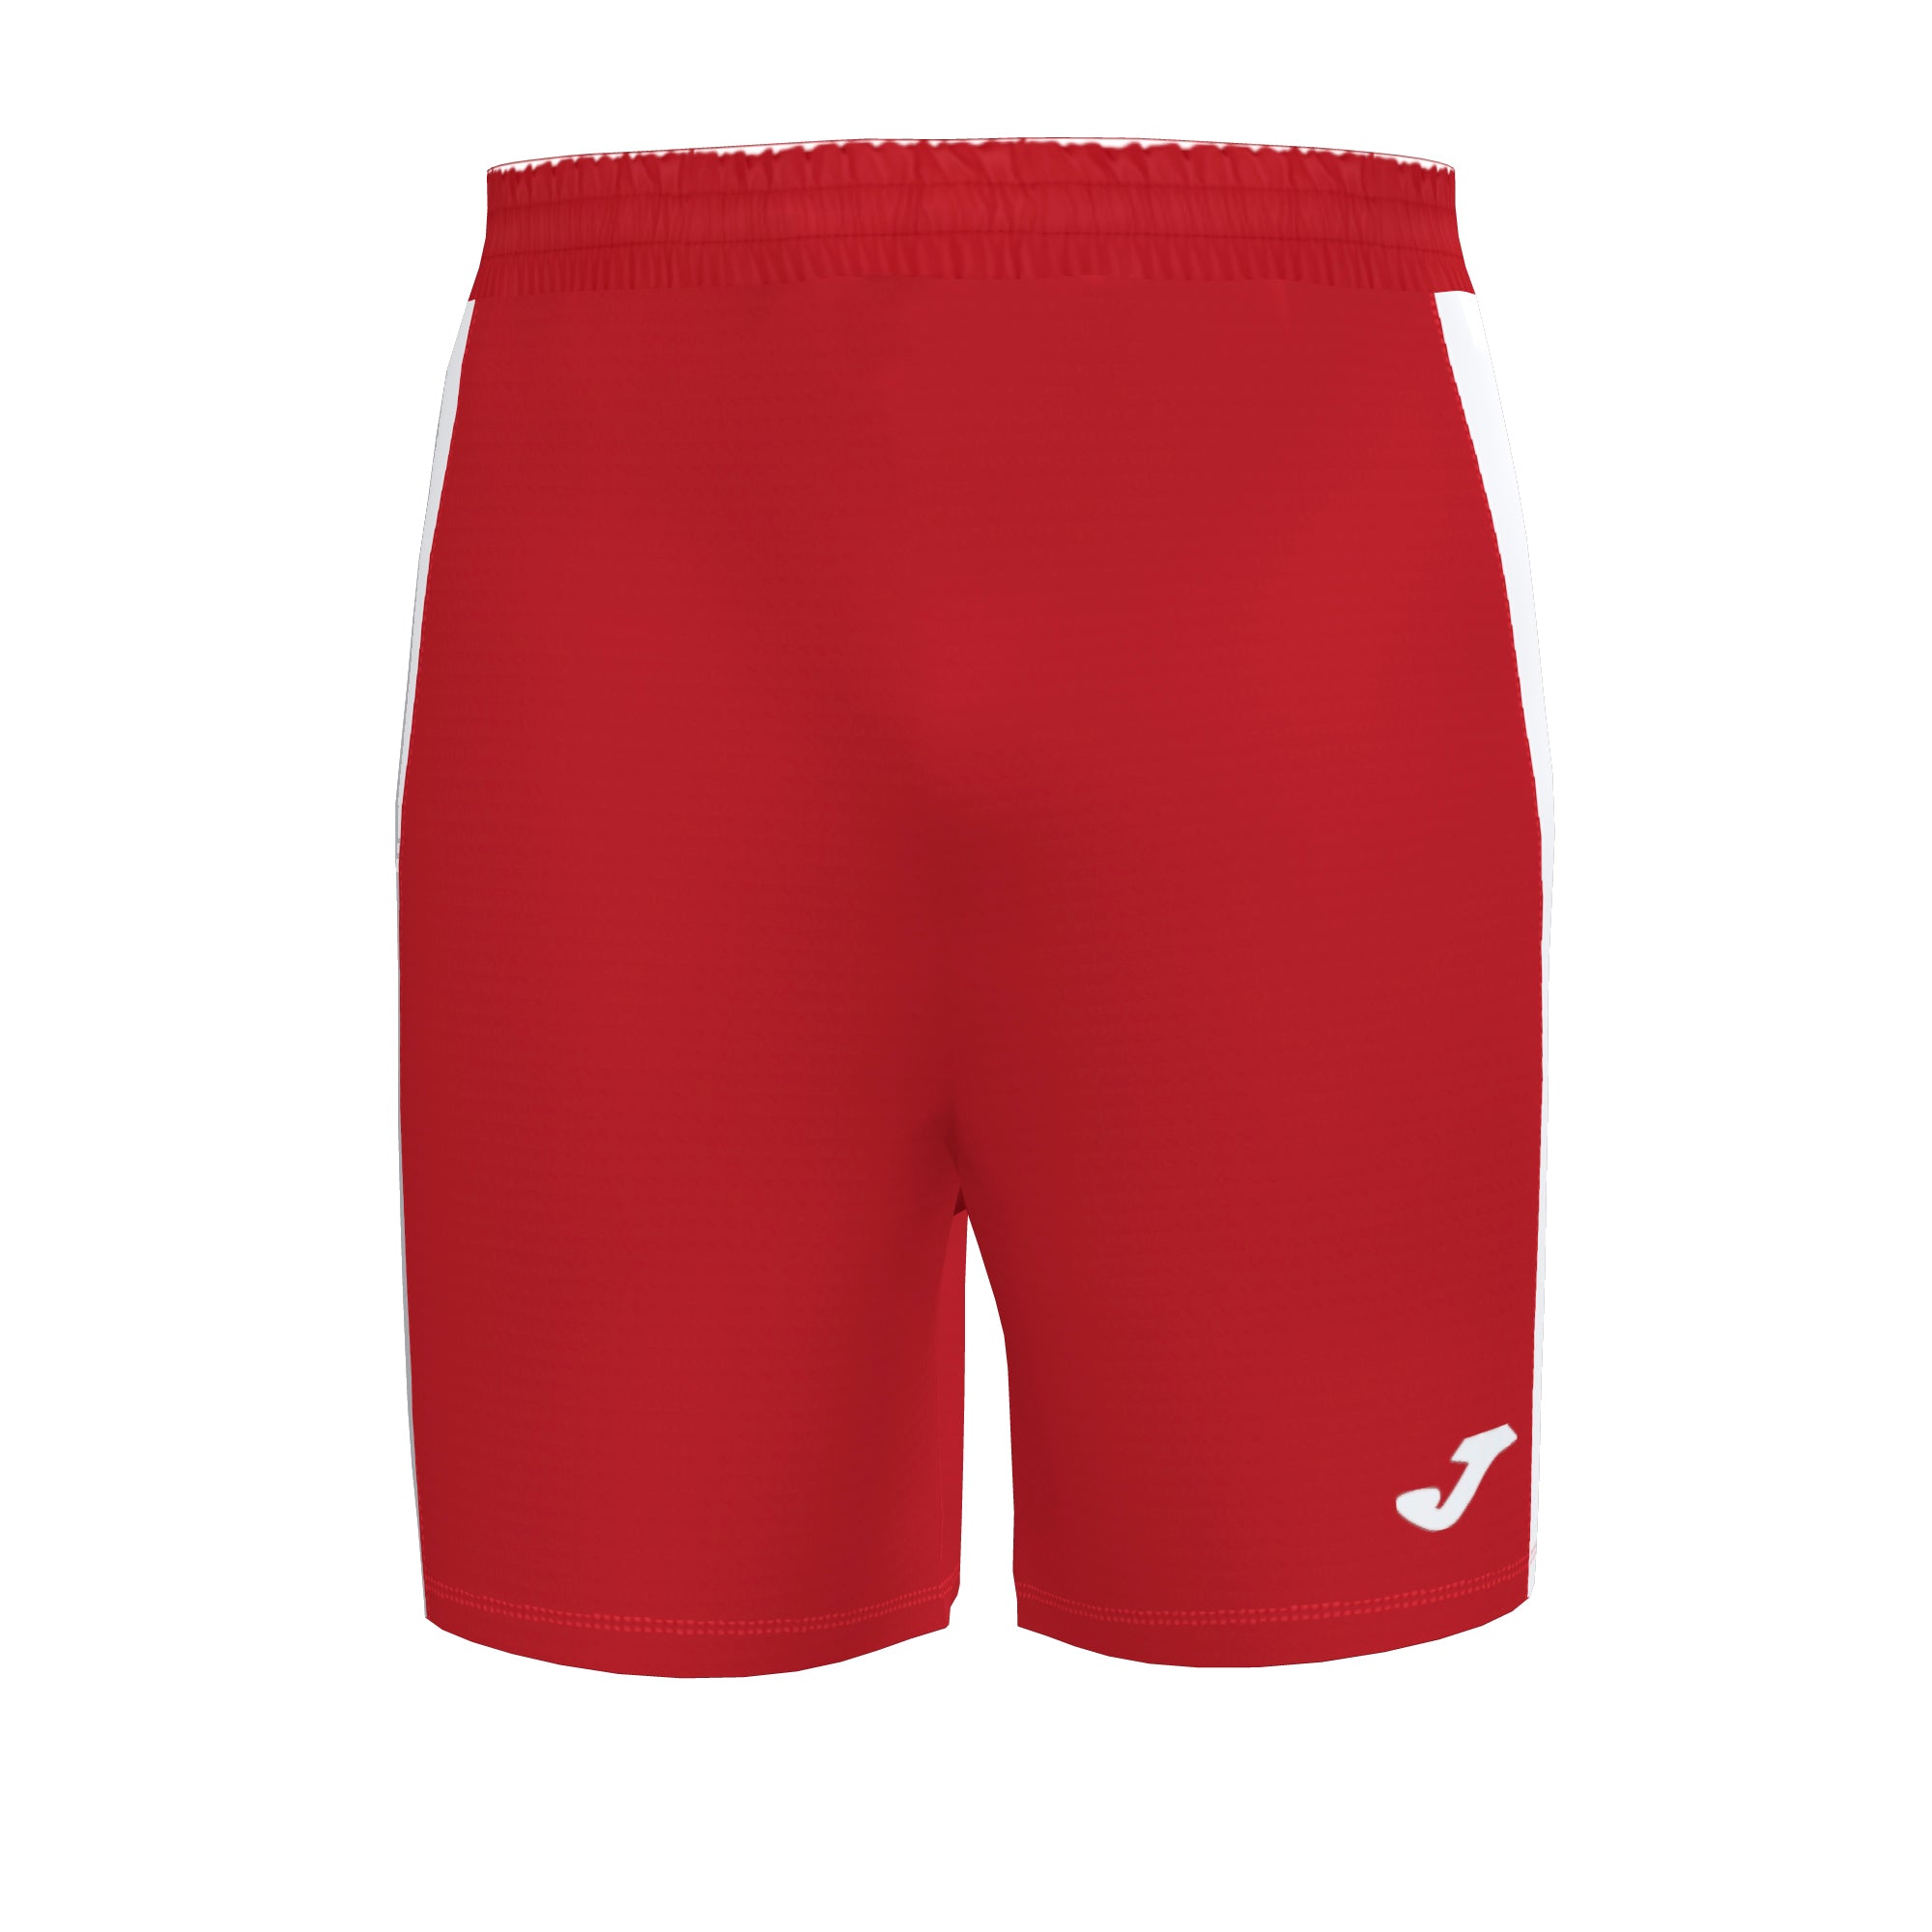 Joma Maxi Short - Red/White